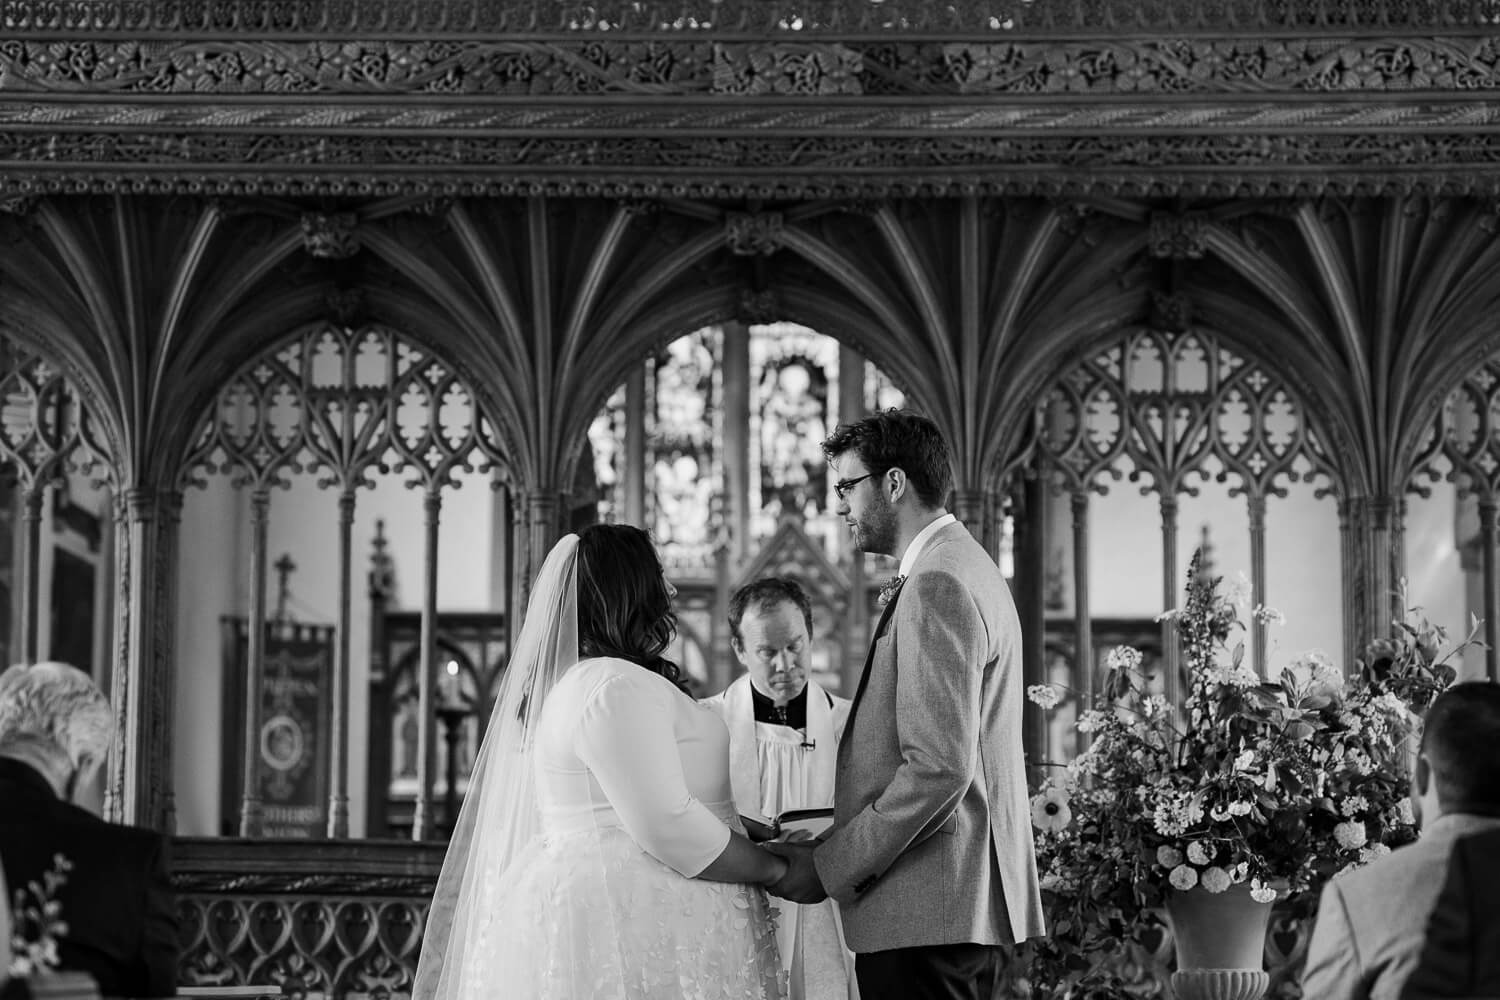 Bride and groom exchange vows at St Andrews church in Ipplepen, Devon.